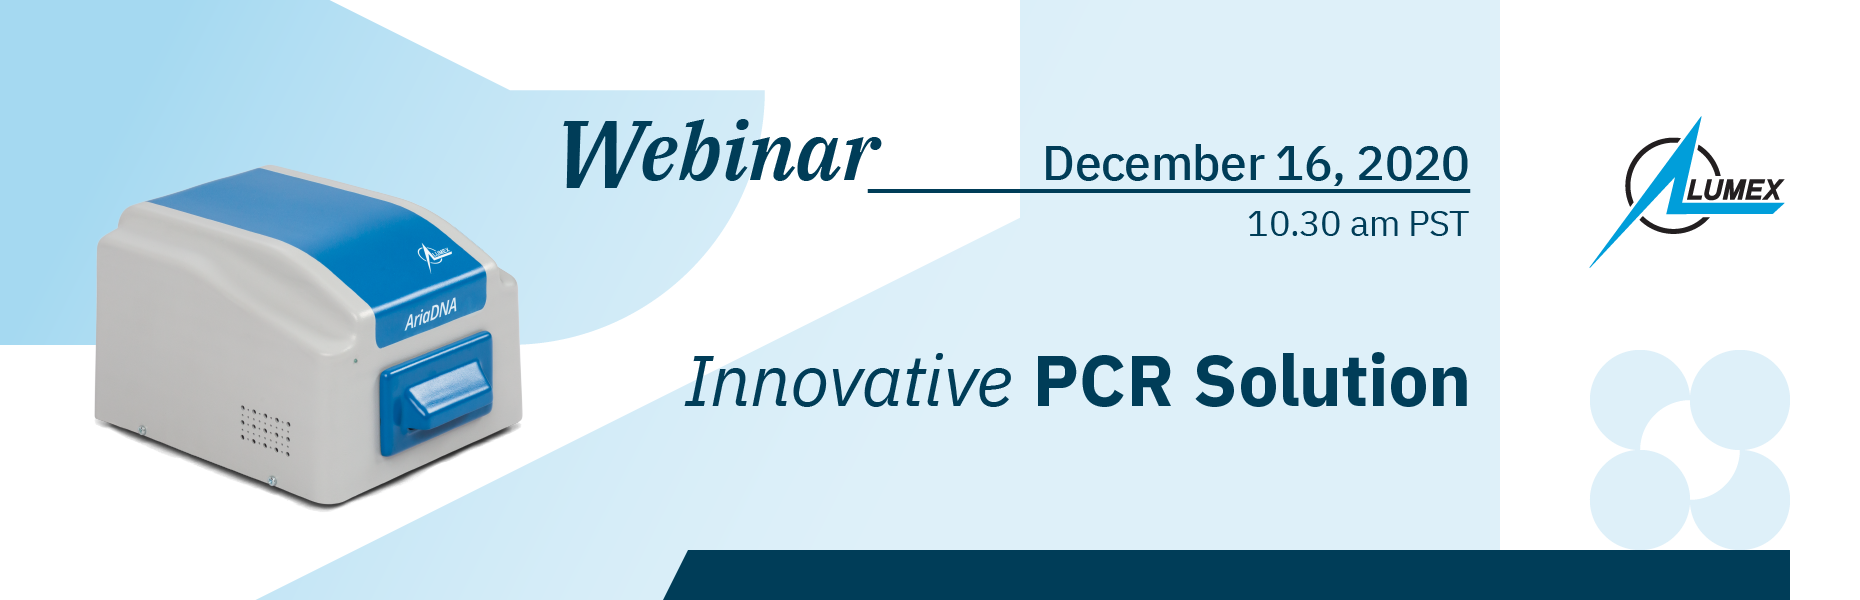 Webinar: Innovation PCR technology